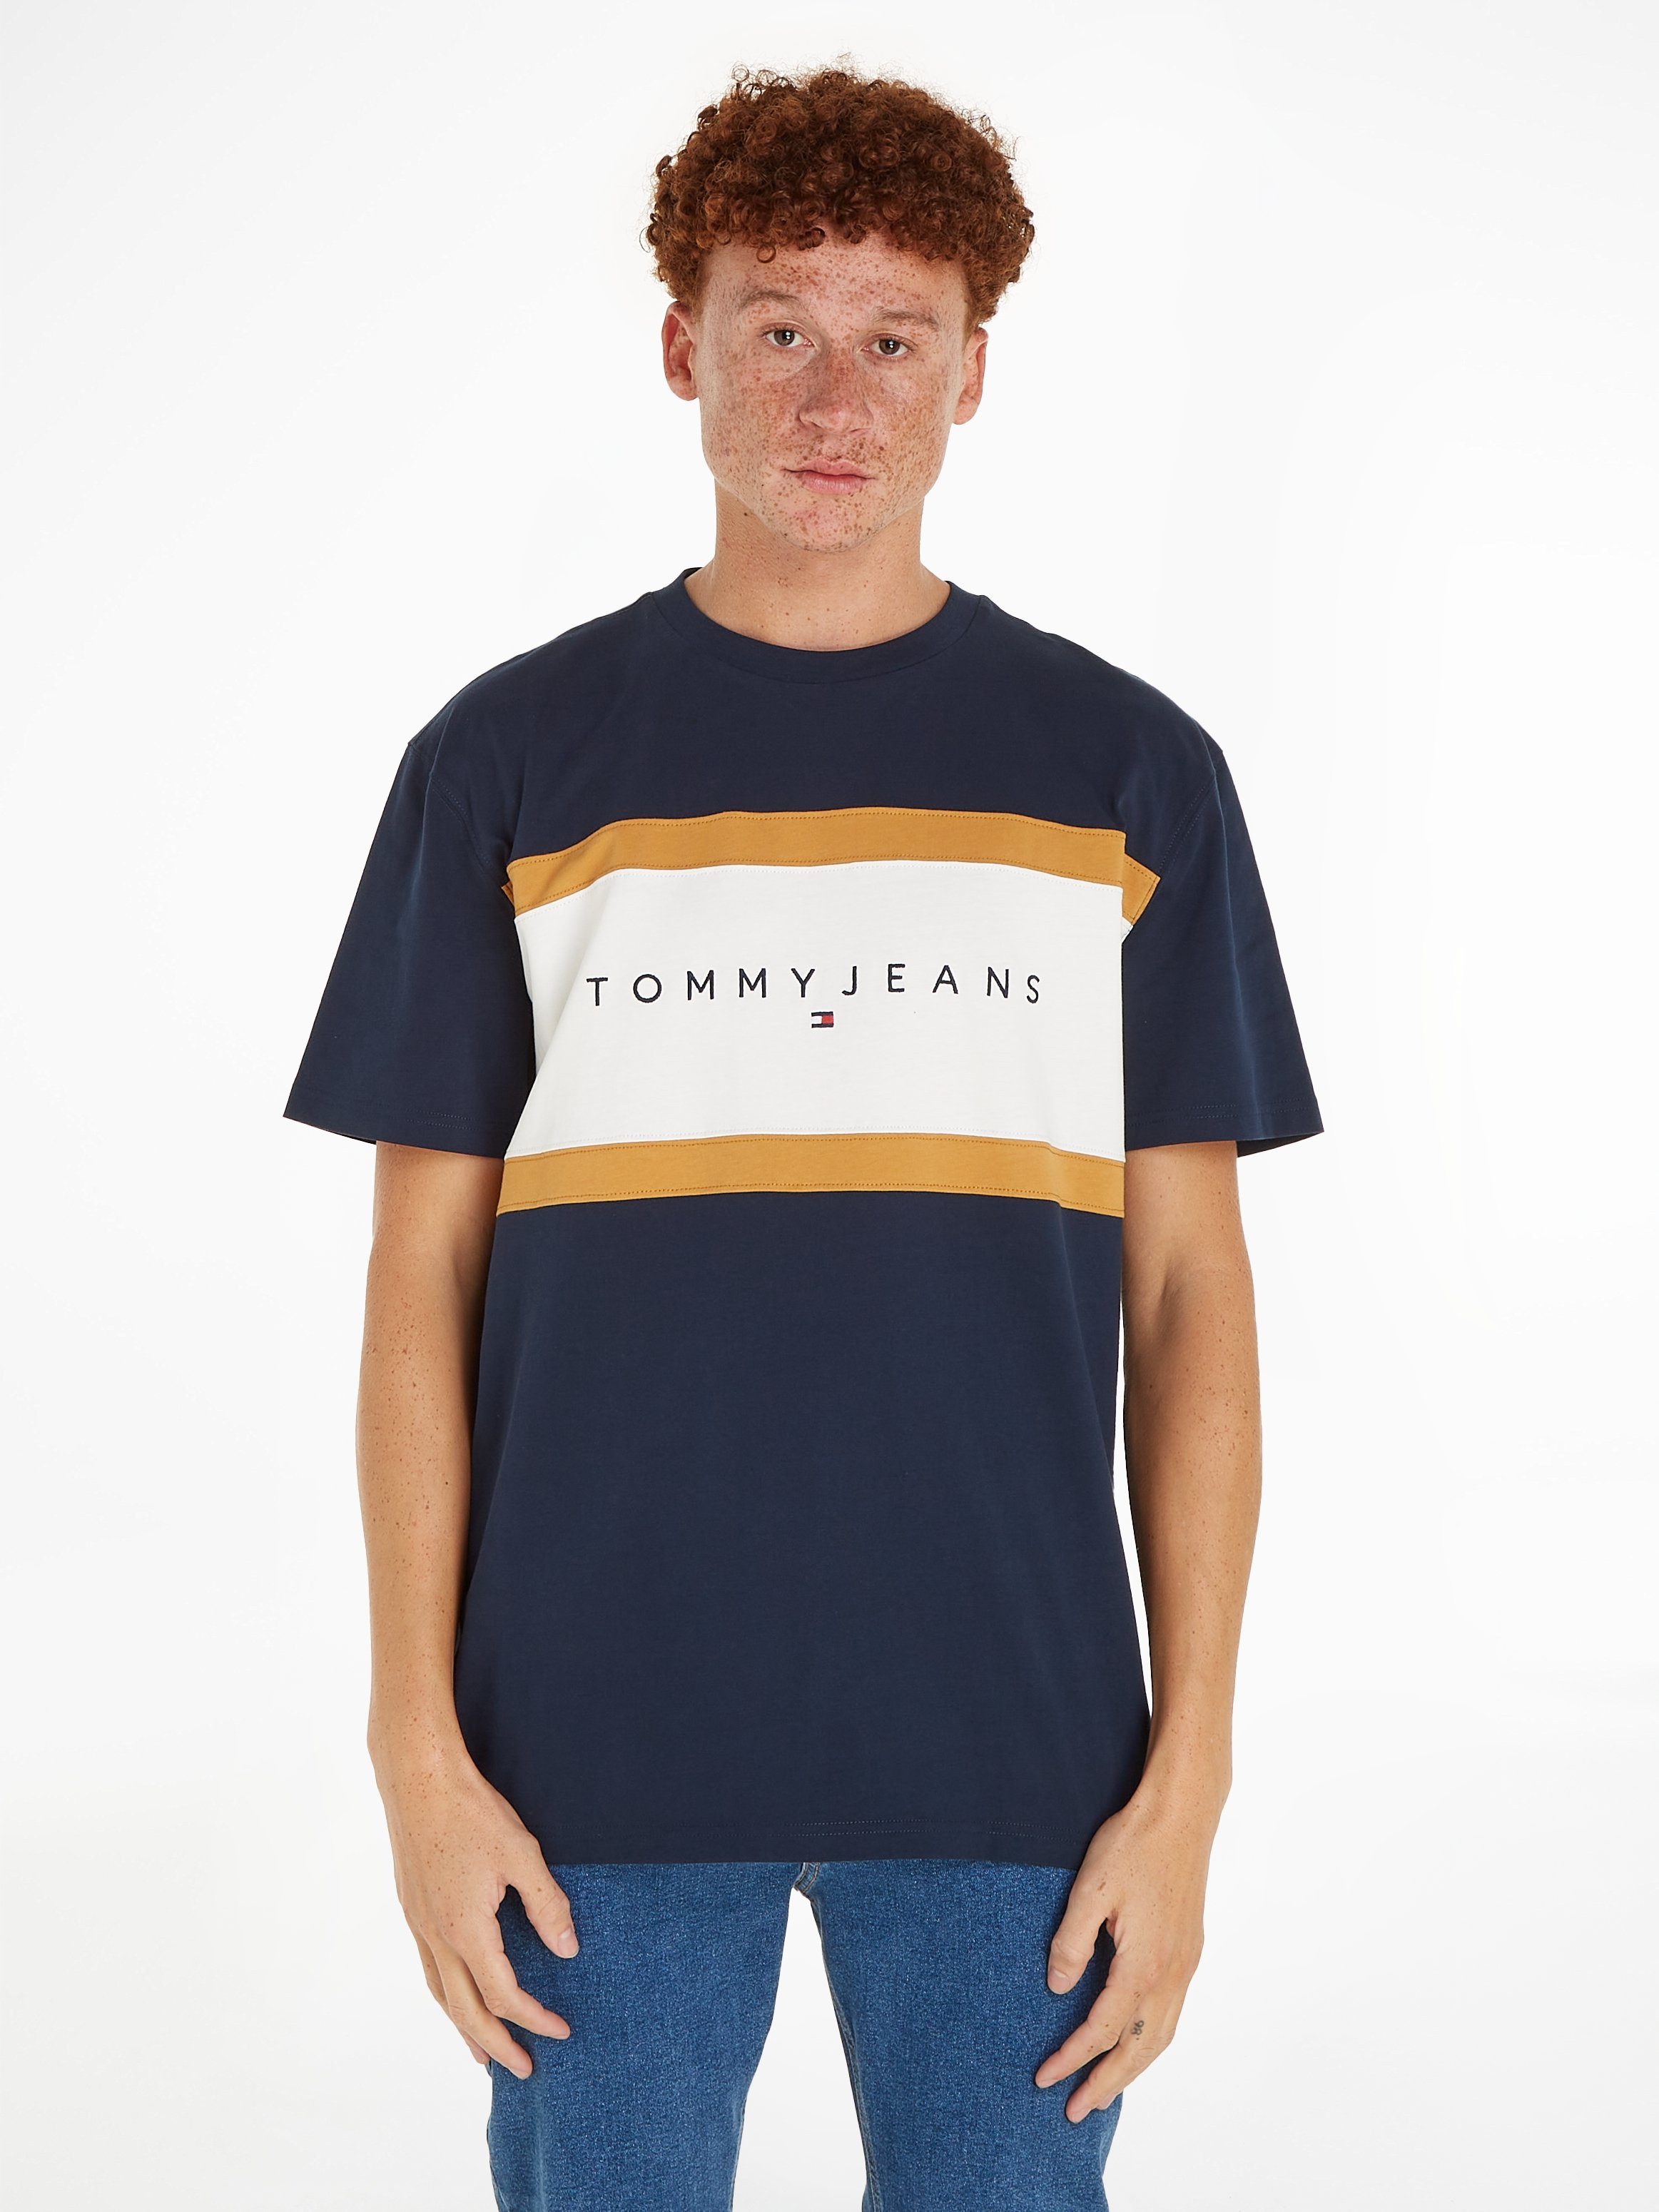 Tommy Jeans T-Shirt TJM REG mit CUT Markenschriftzug SEW & TEE großem